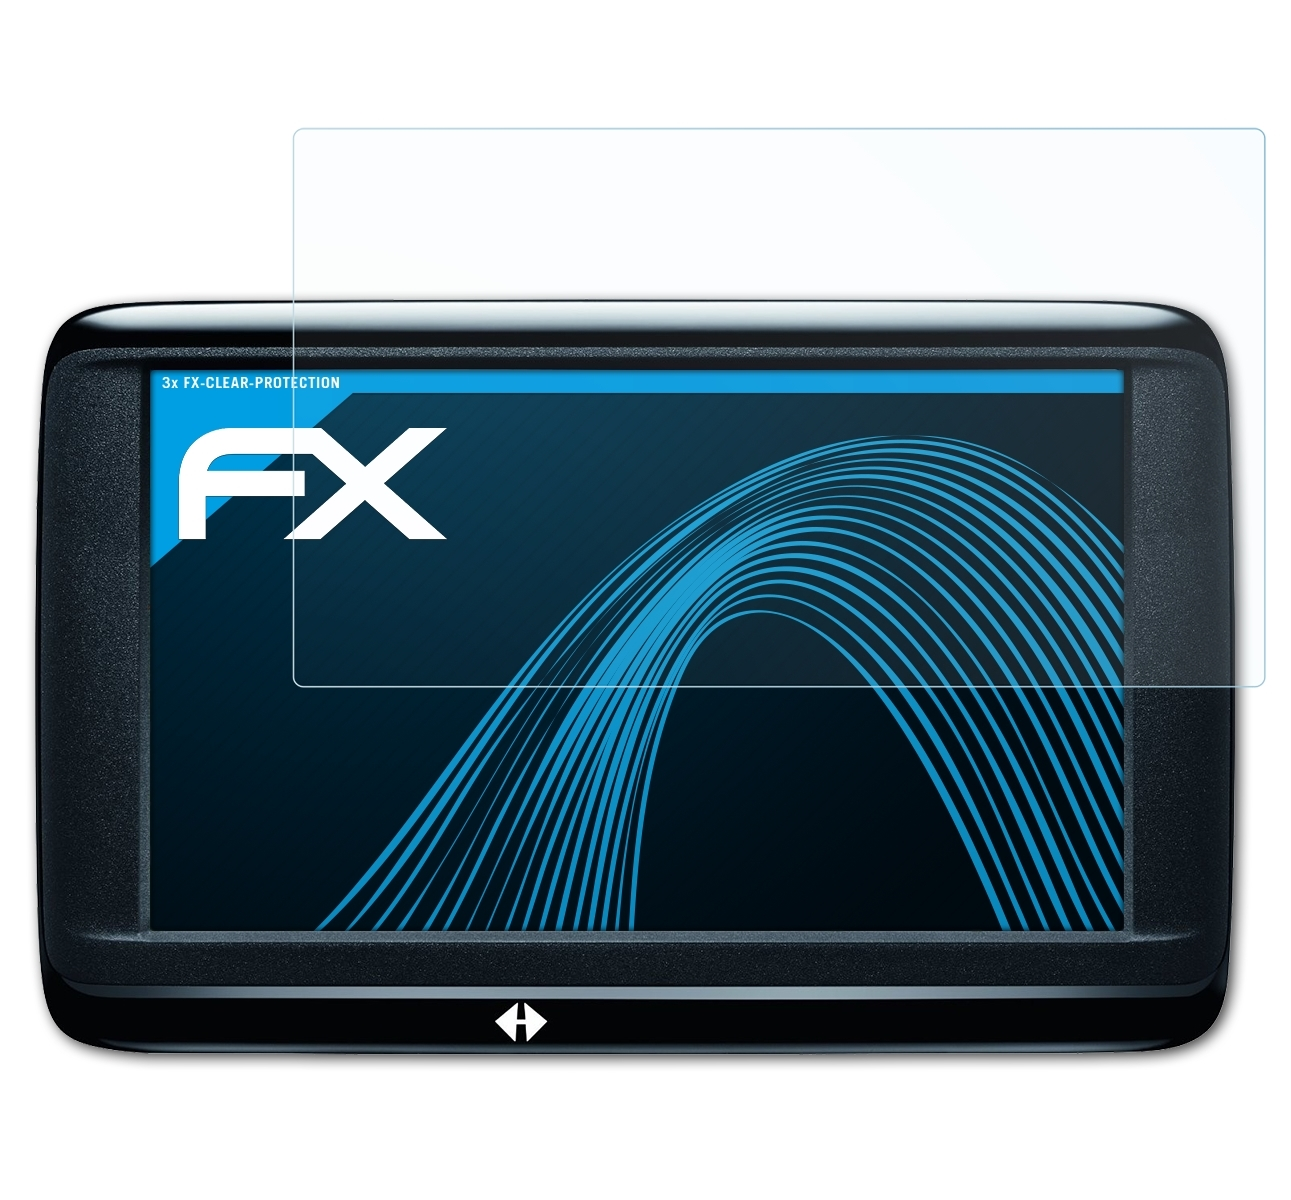 Displayschutz(für 3x ATFOLIX Navigon 40 FX-Clear Premium)